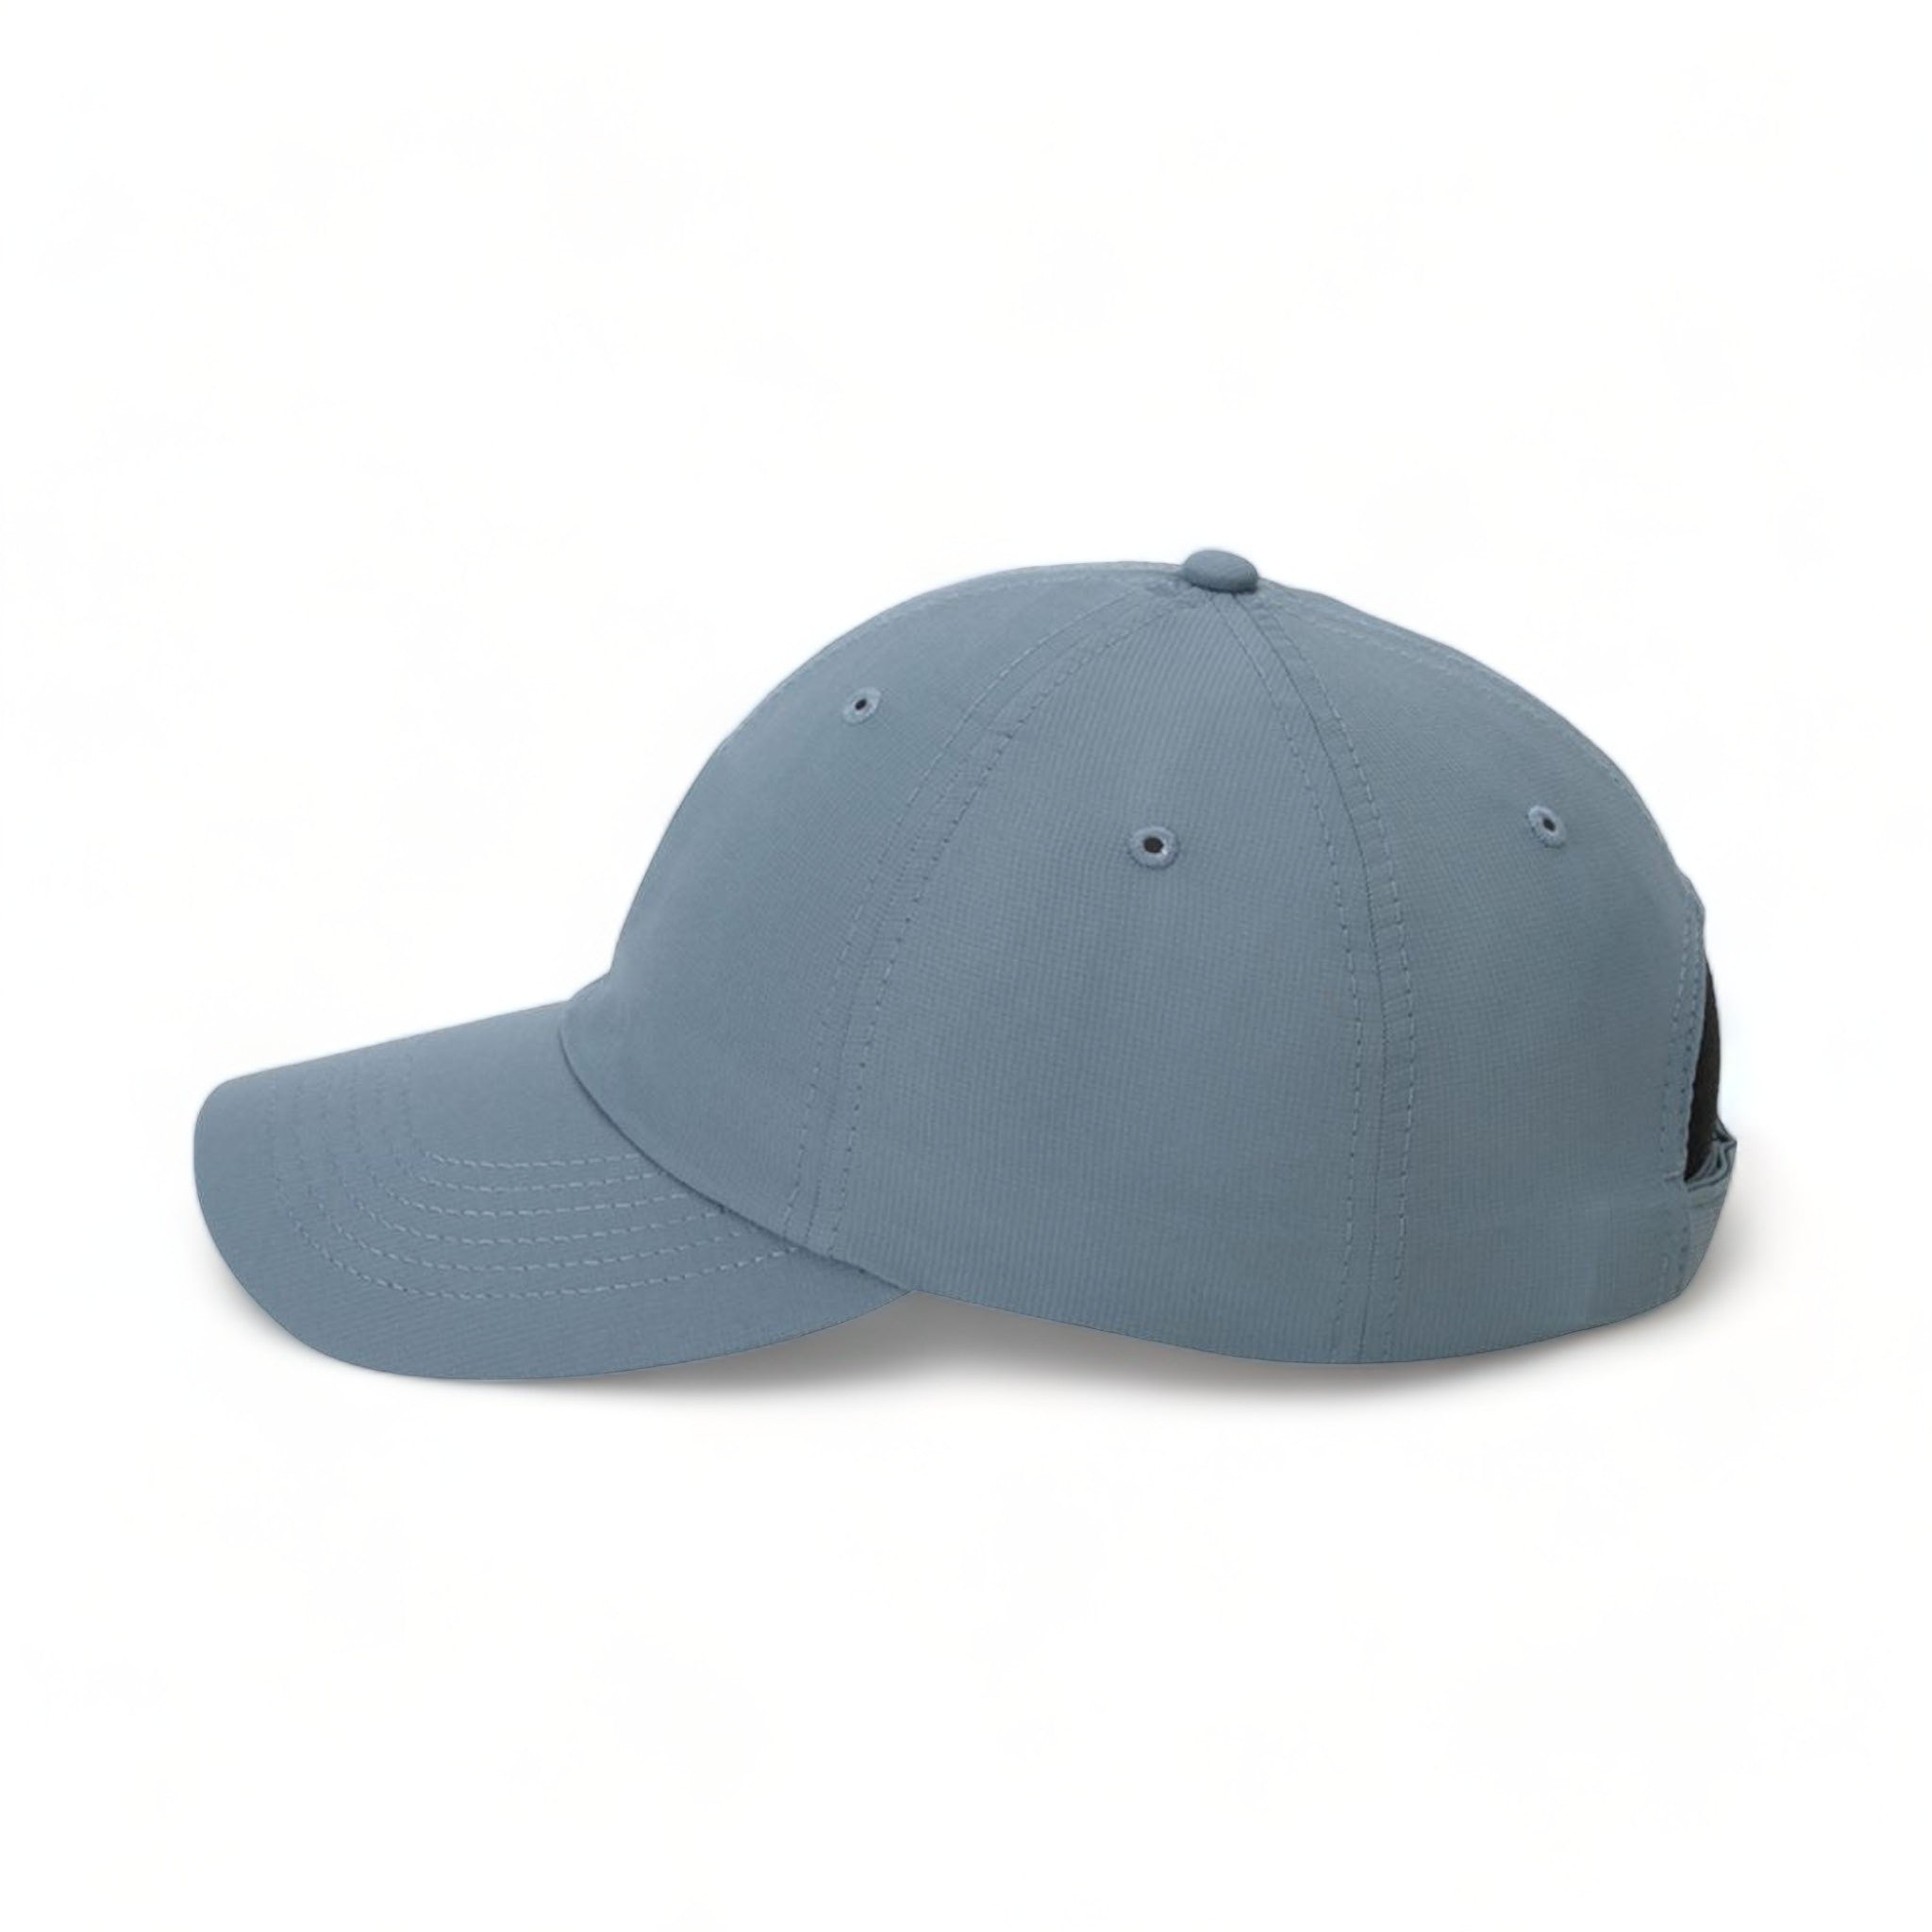 Side view of Imperial X210P custom hat in breaker blue